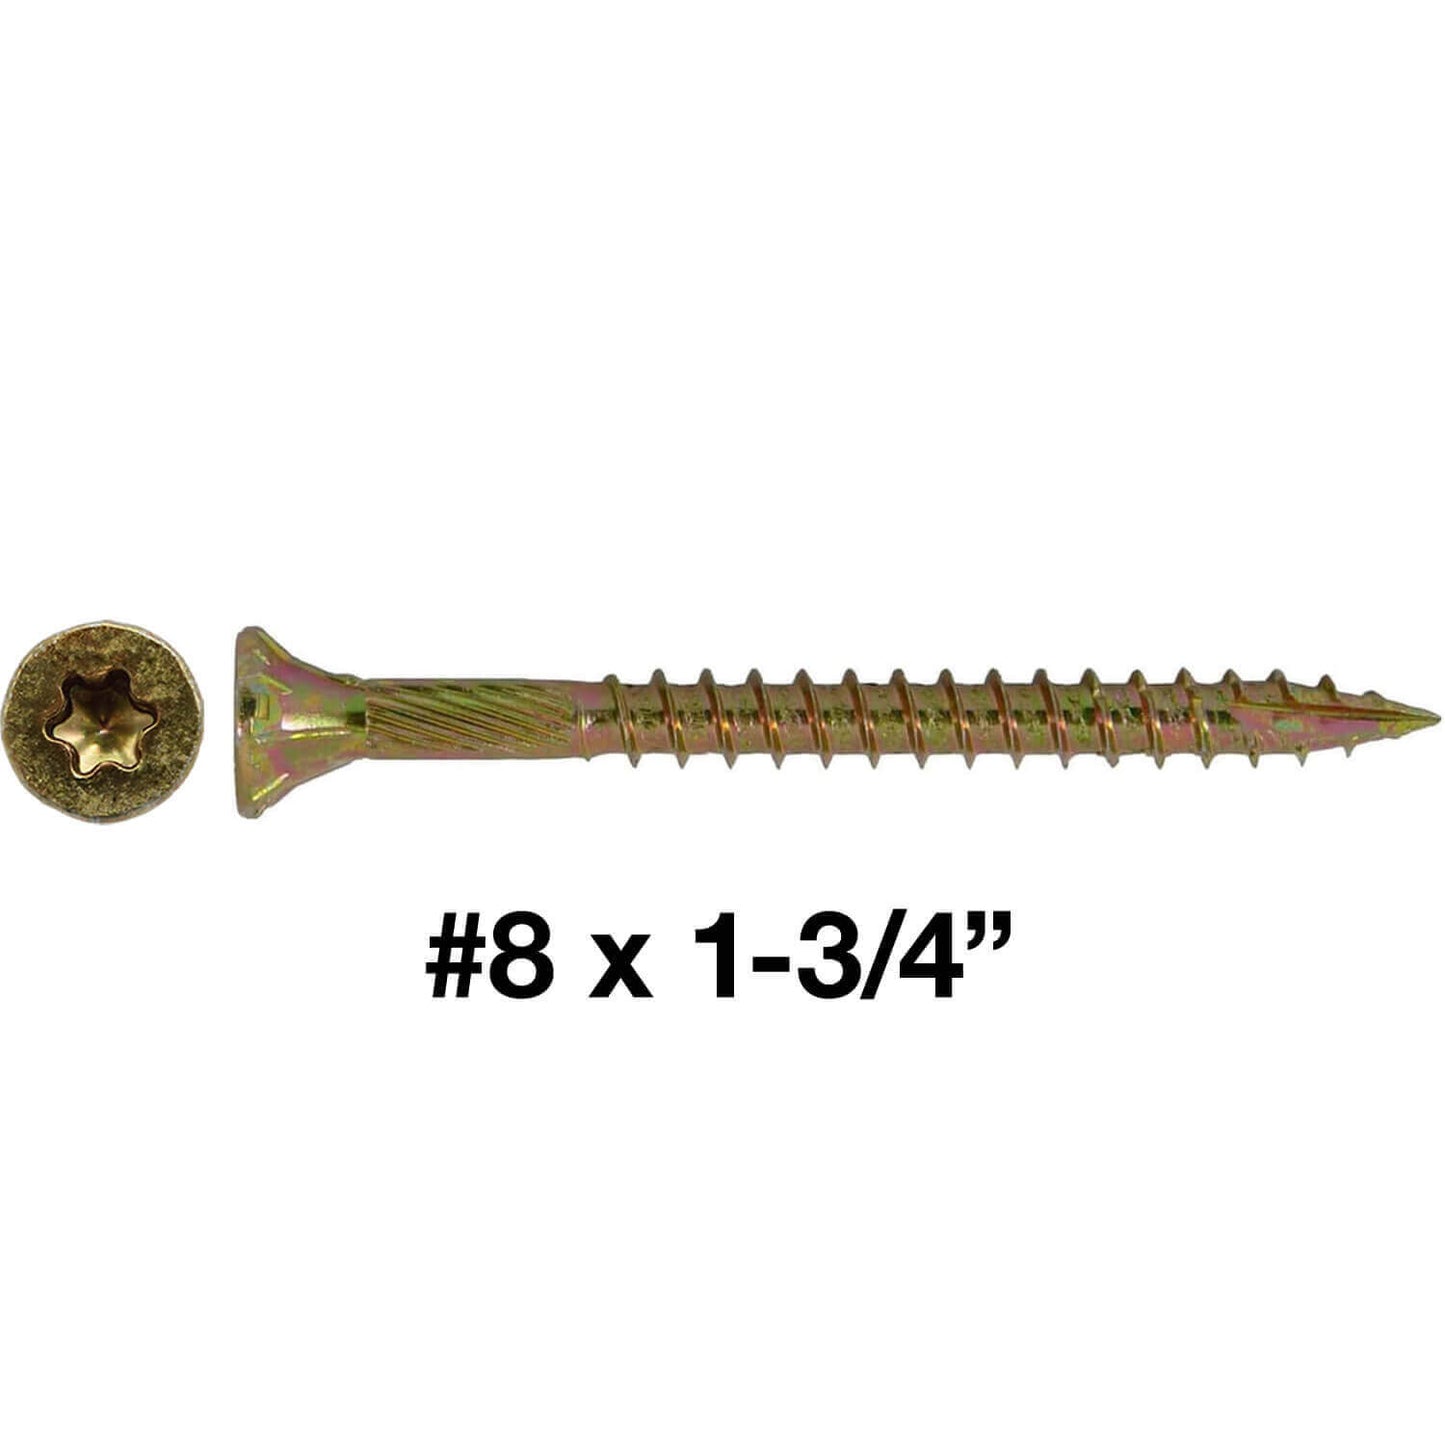 #8  (YTX) Yellow Zinc Coated General Purpose Wood Screws. Torx/Star Drive Head - Multipurpose Torx/Star Drive Wood Screws